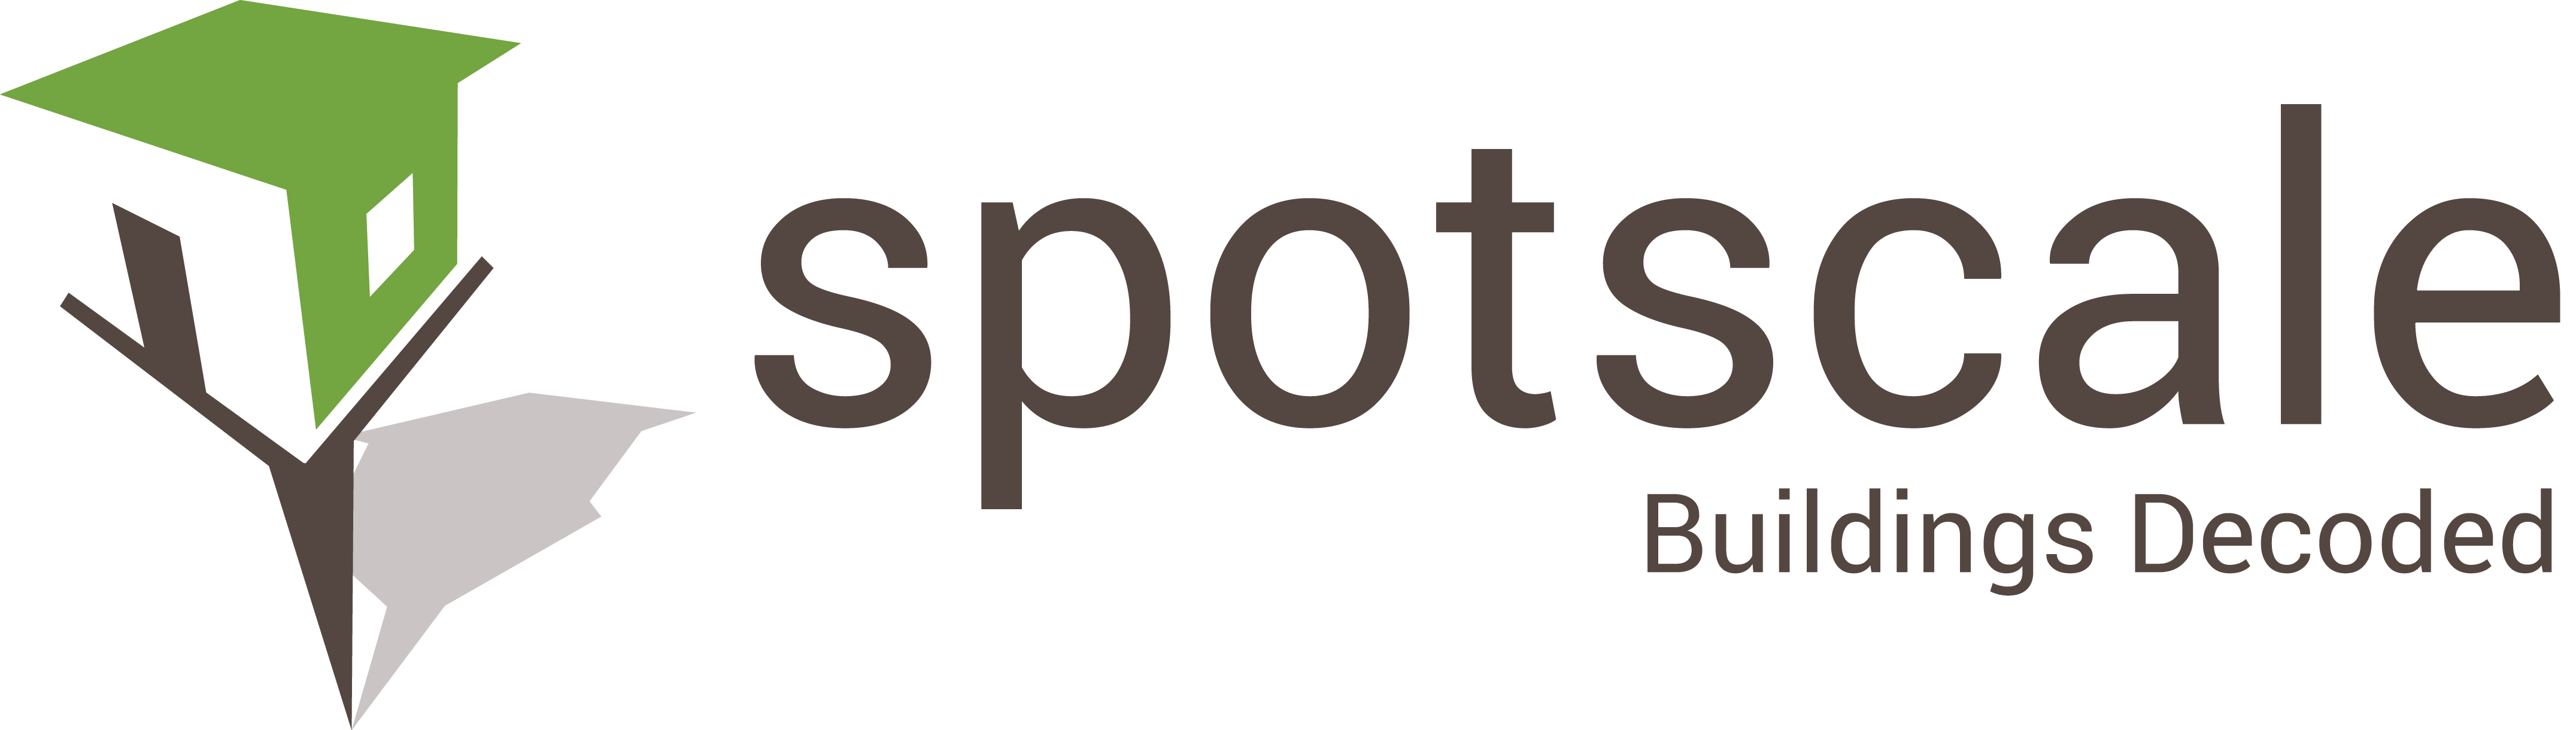 sponsor-spotscale